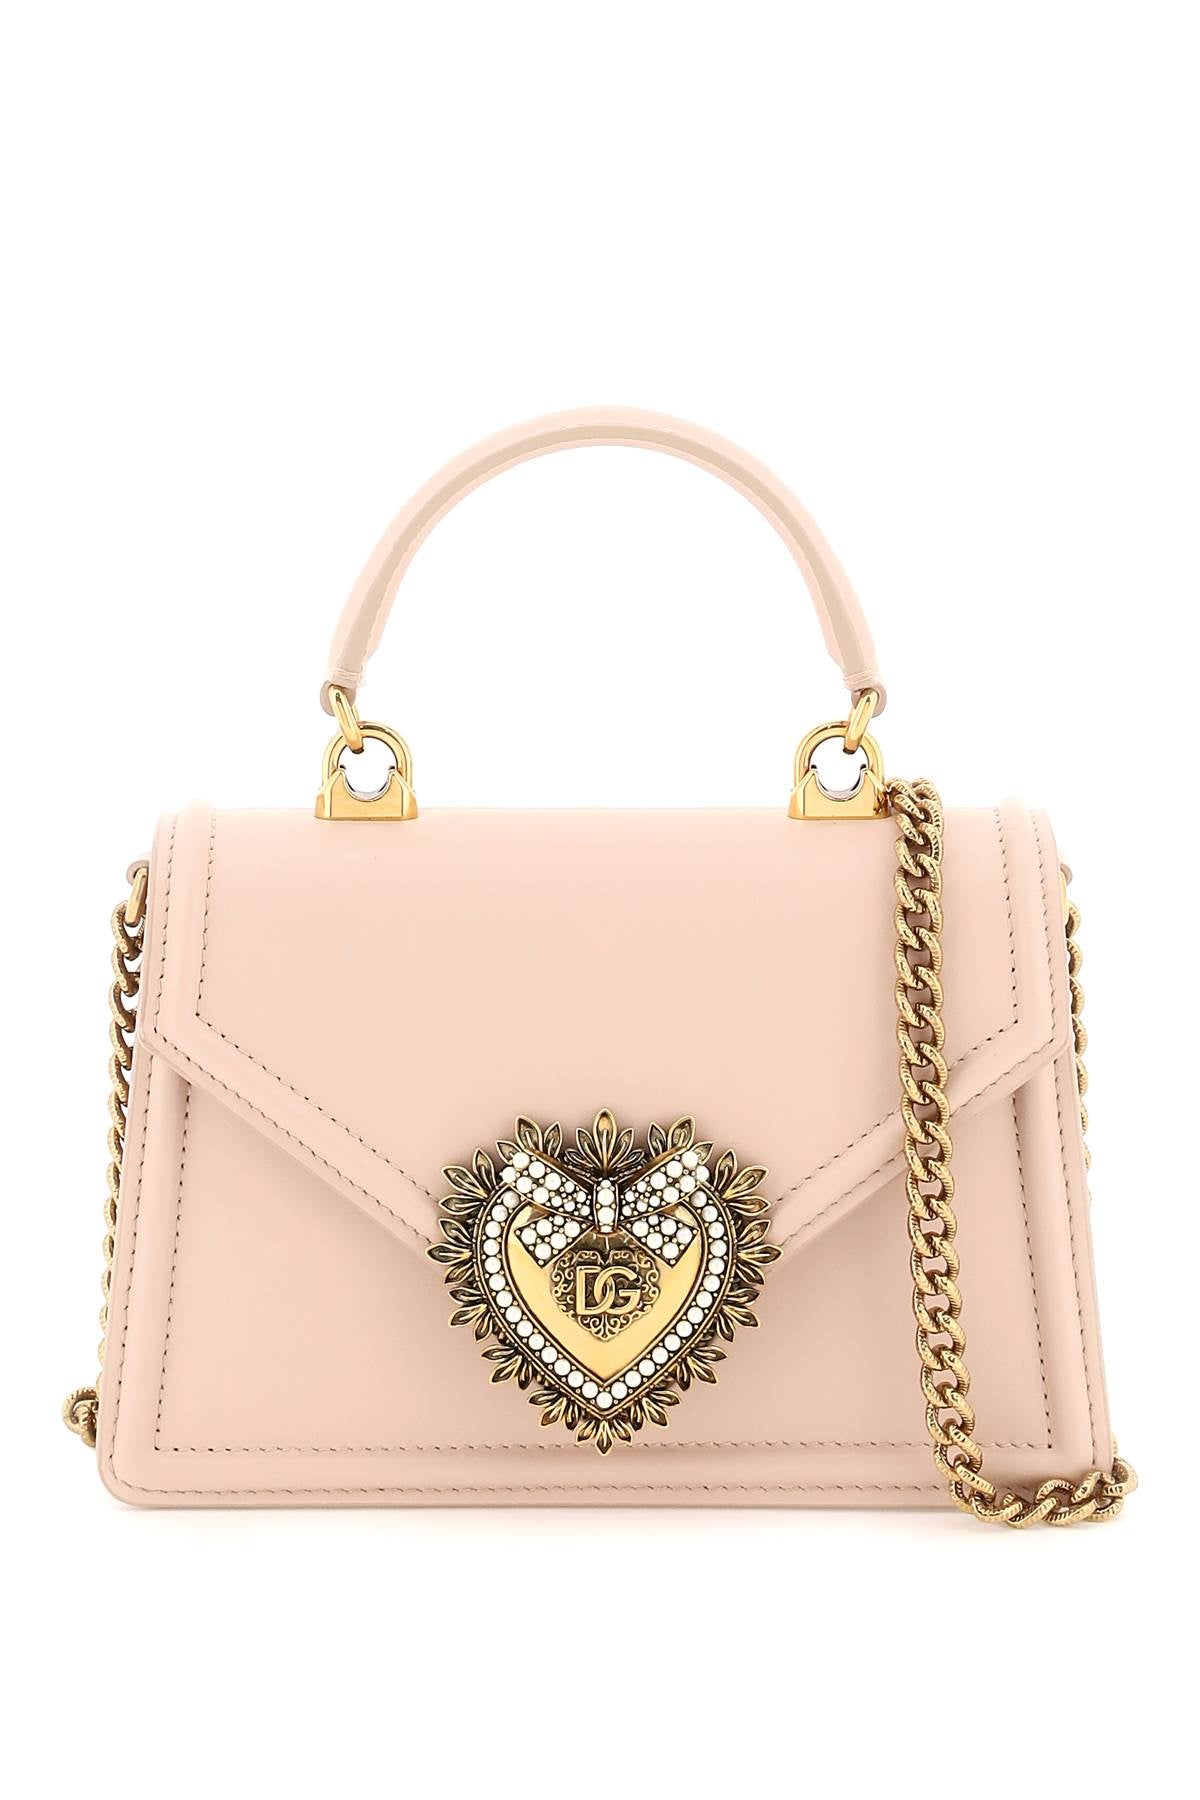 Shop Dolce & Gabbana Luxurious Pale Pink Mini Handbag For Women